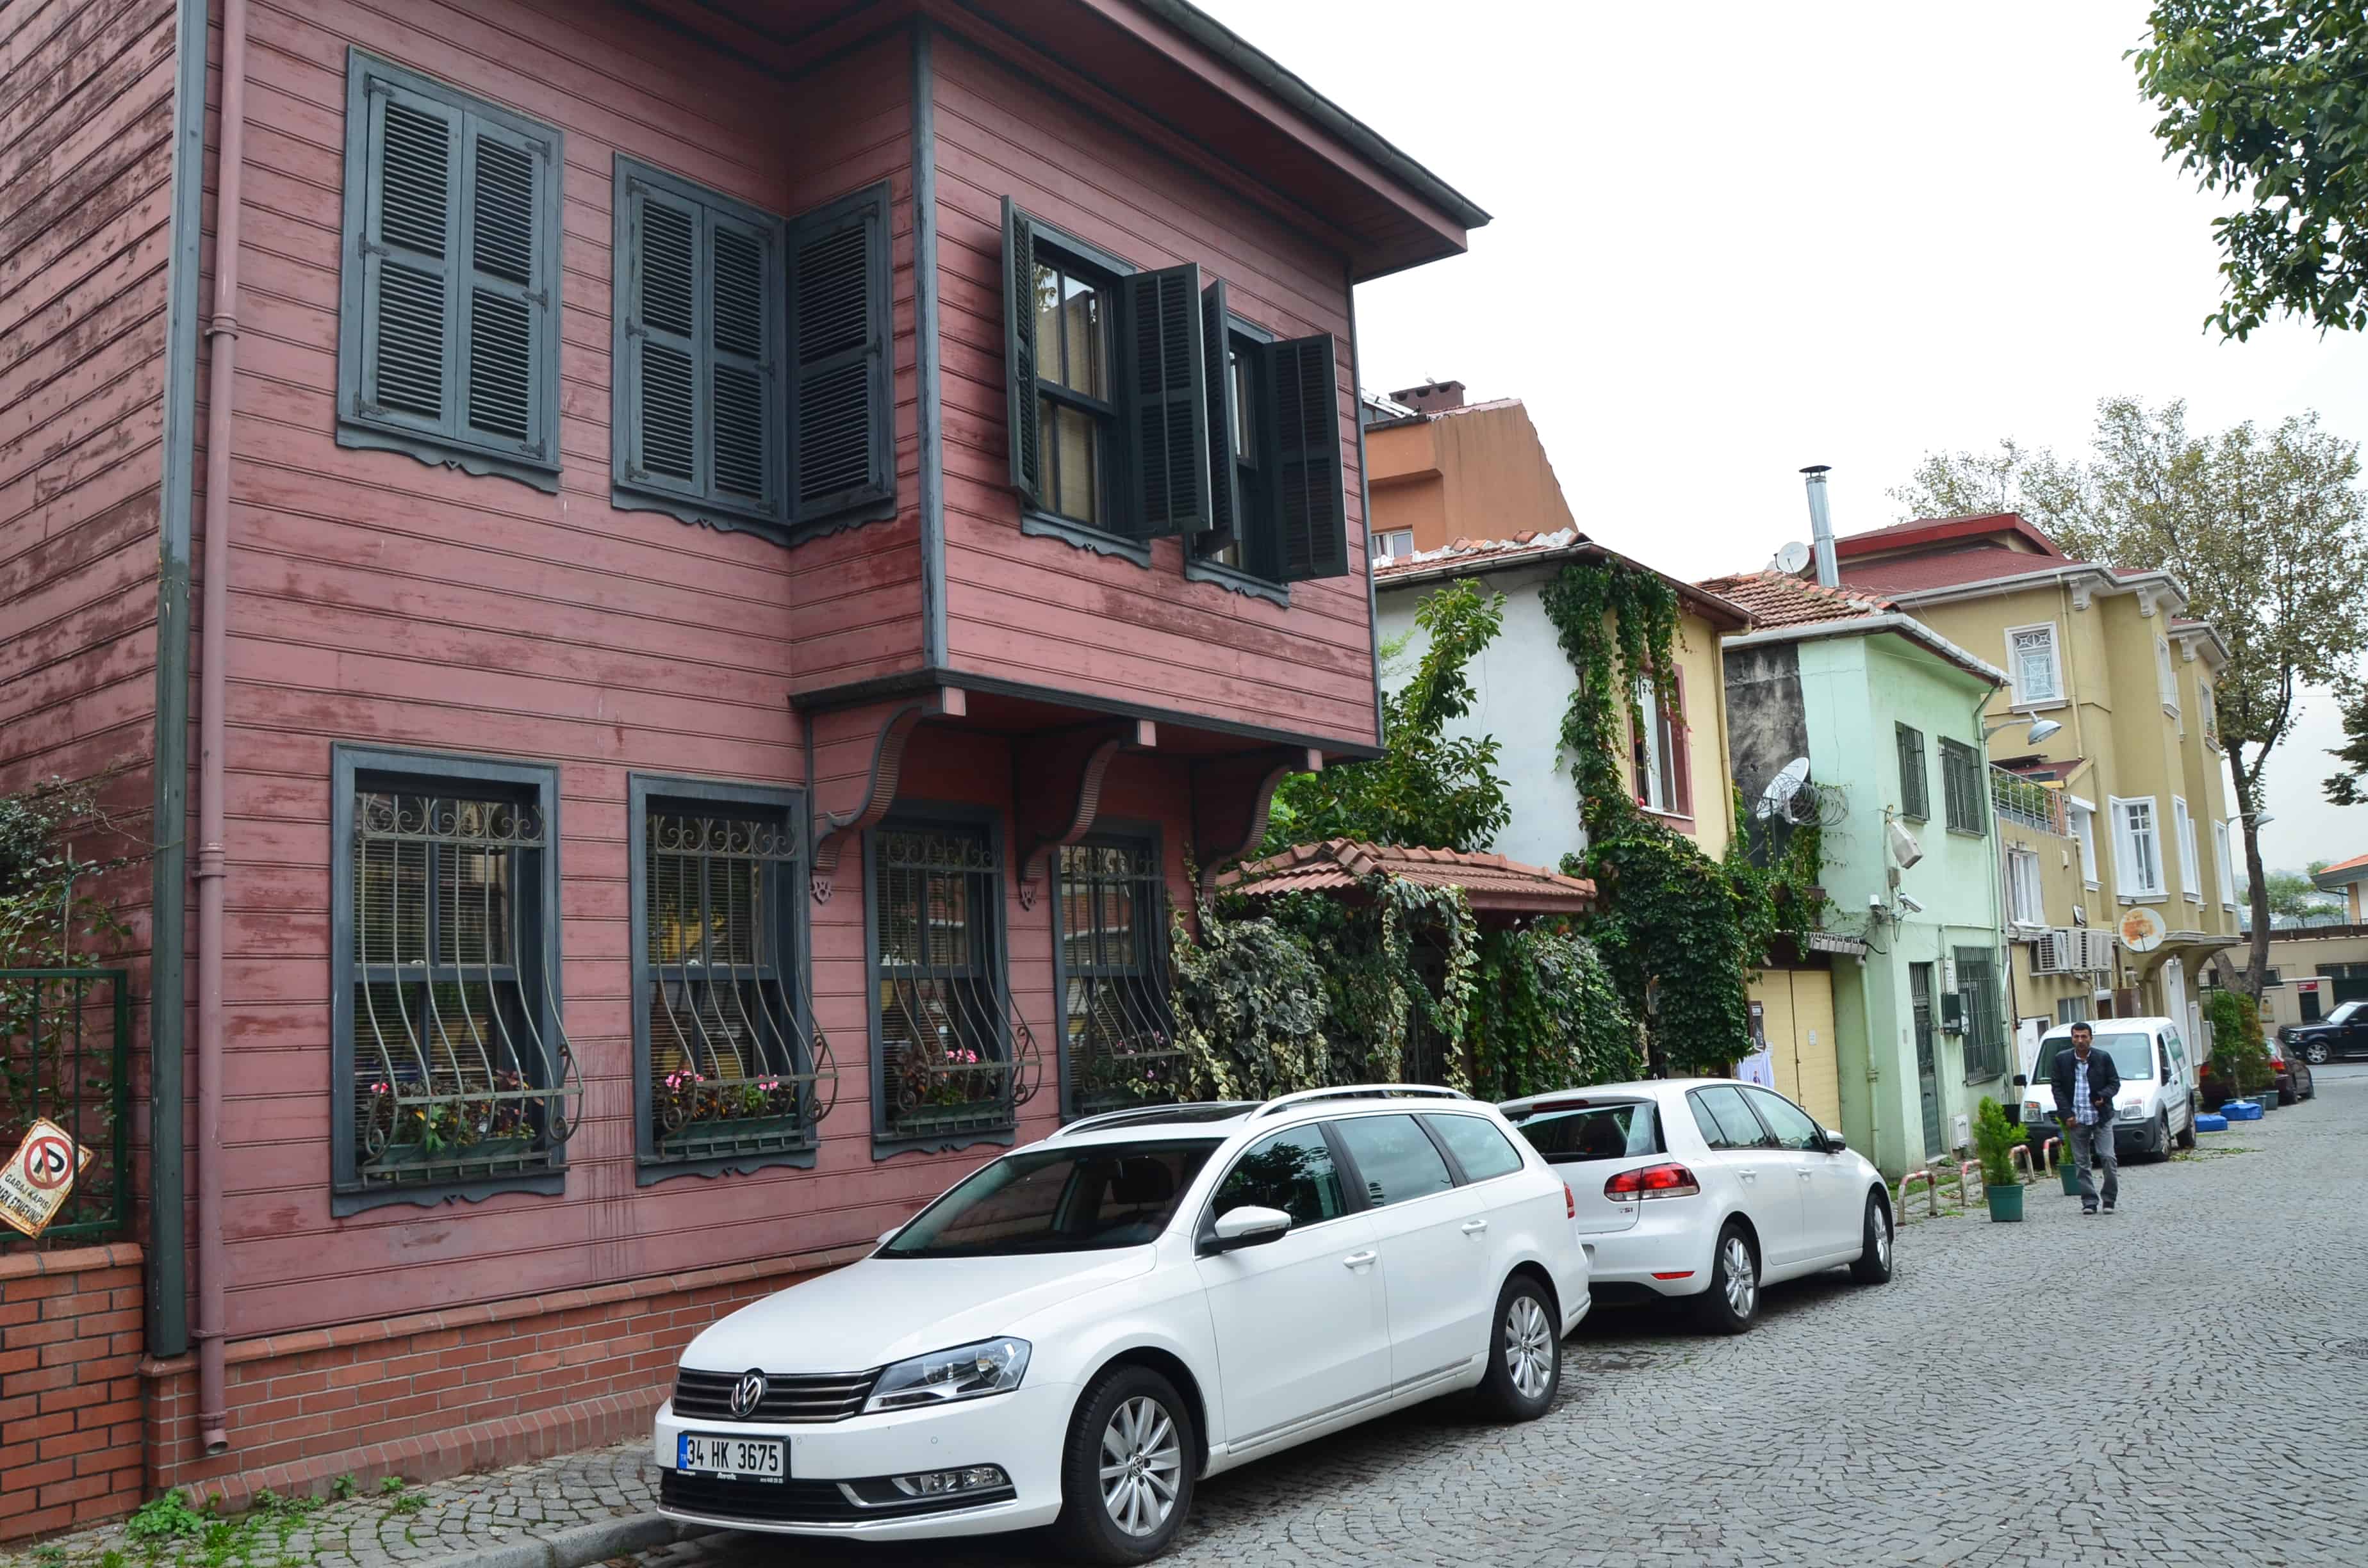 Ottoman homes in Kuzguncuk, Istanbul, Turkey